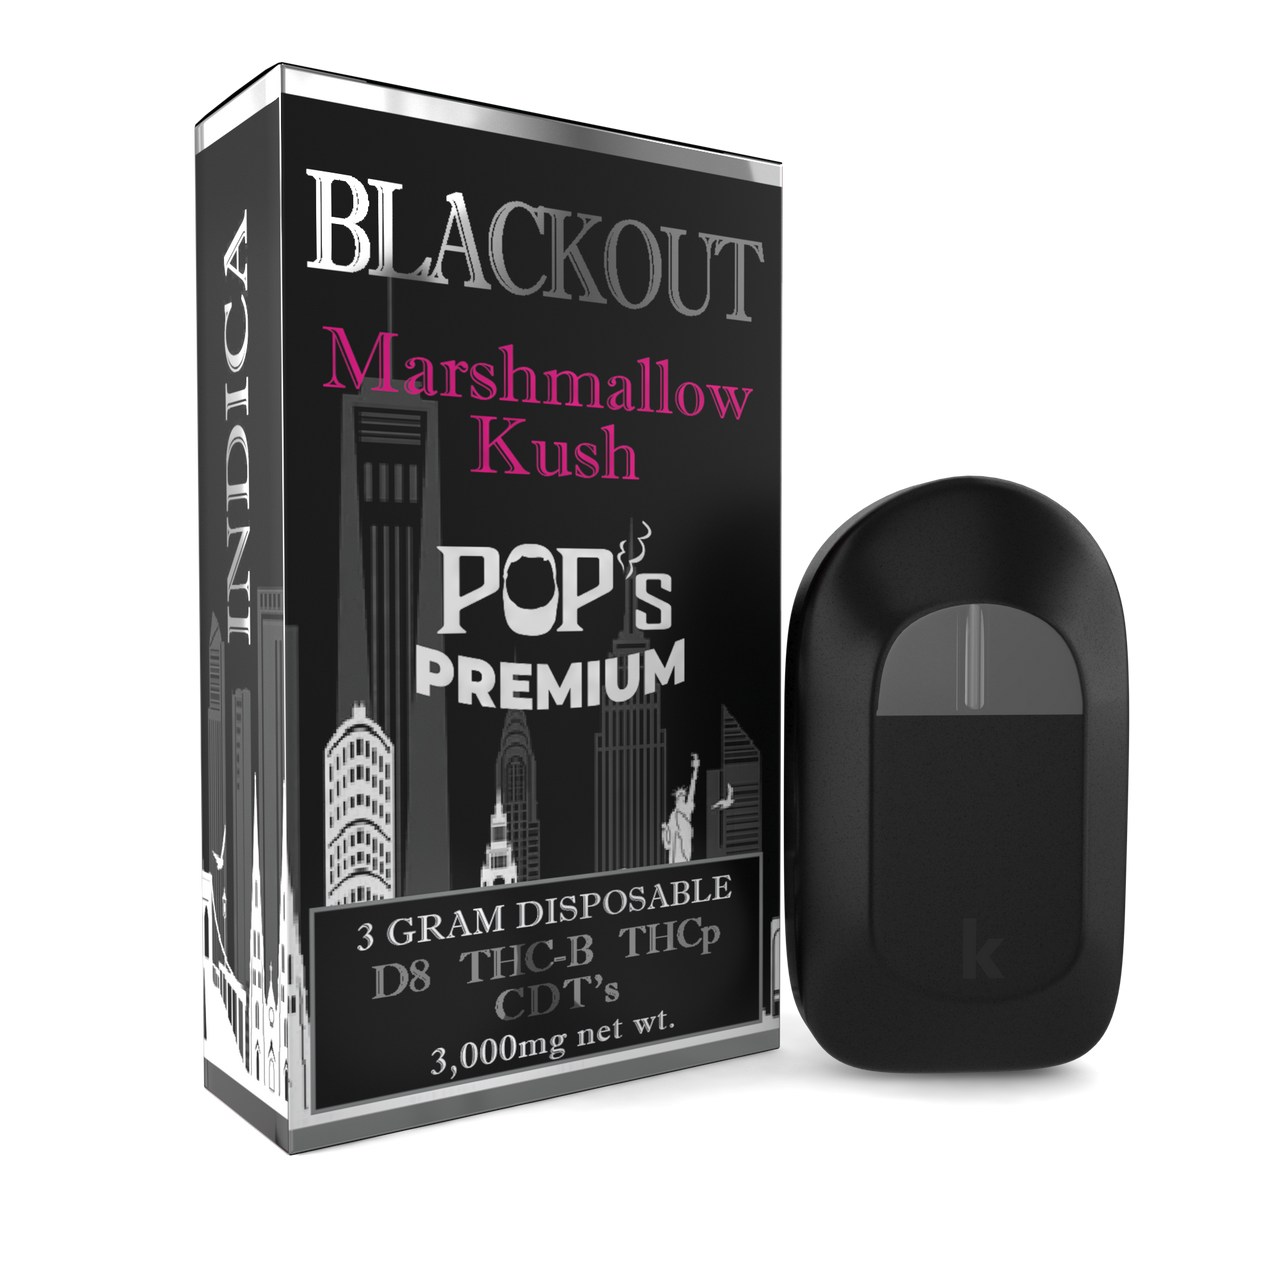 Pop's Premium Marshmallow Kush Blackout Disposable - 3g